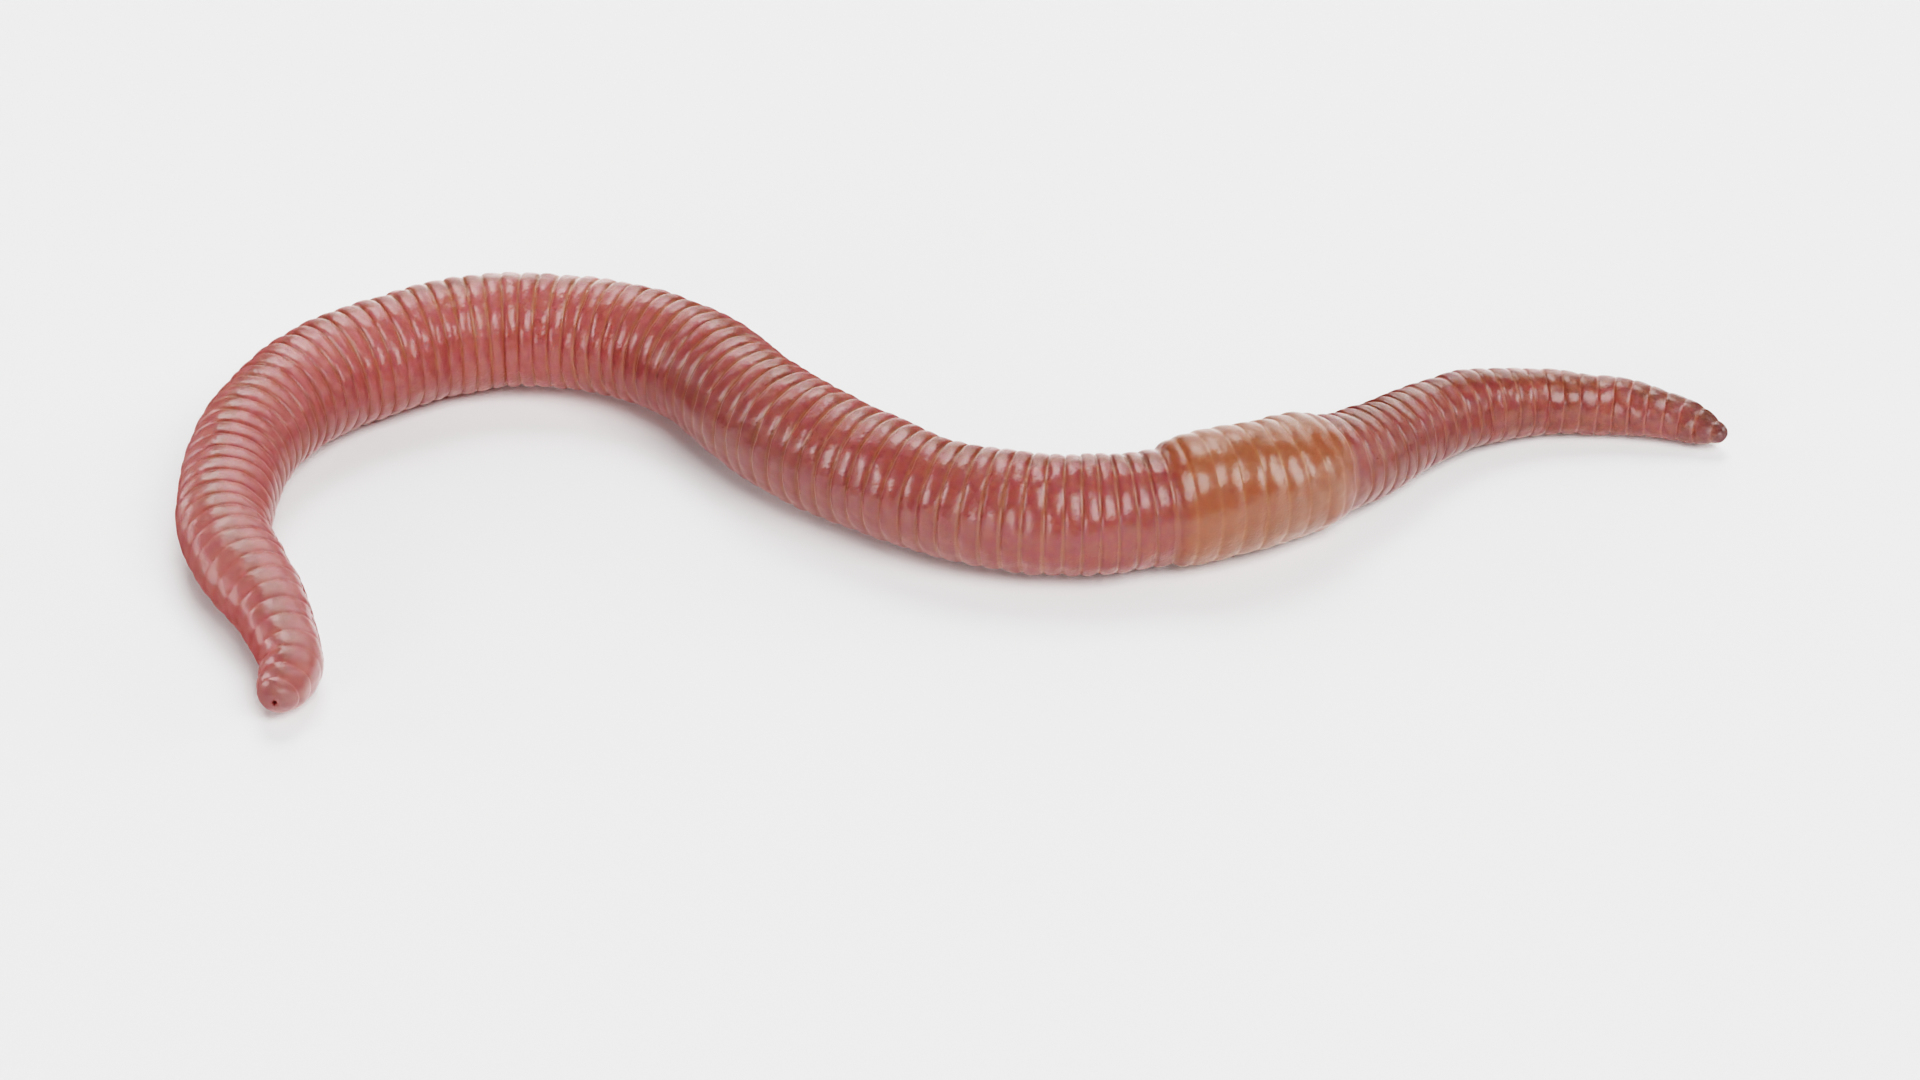 Earthworm Rigged Worm 3D - TurboSquid 1659200